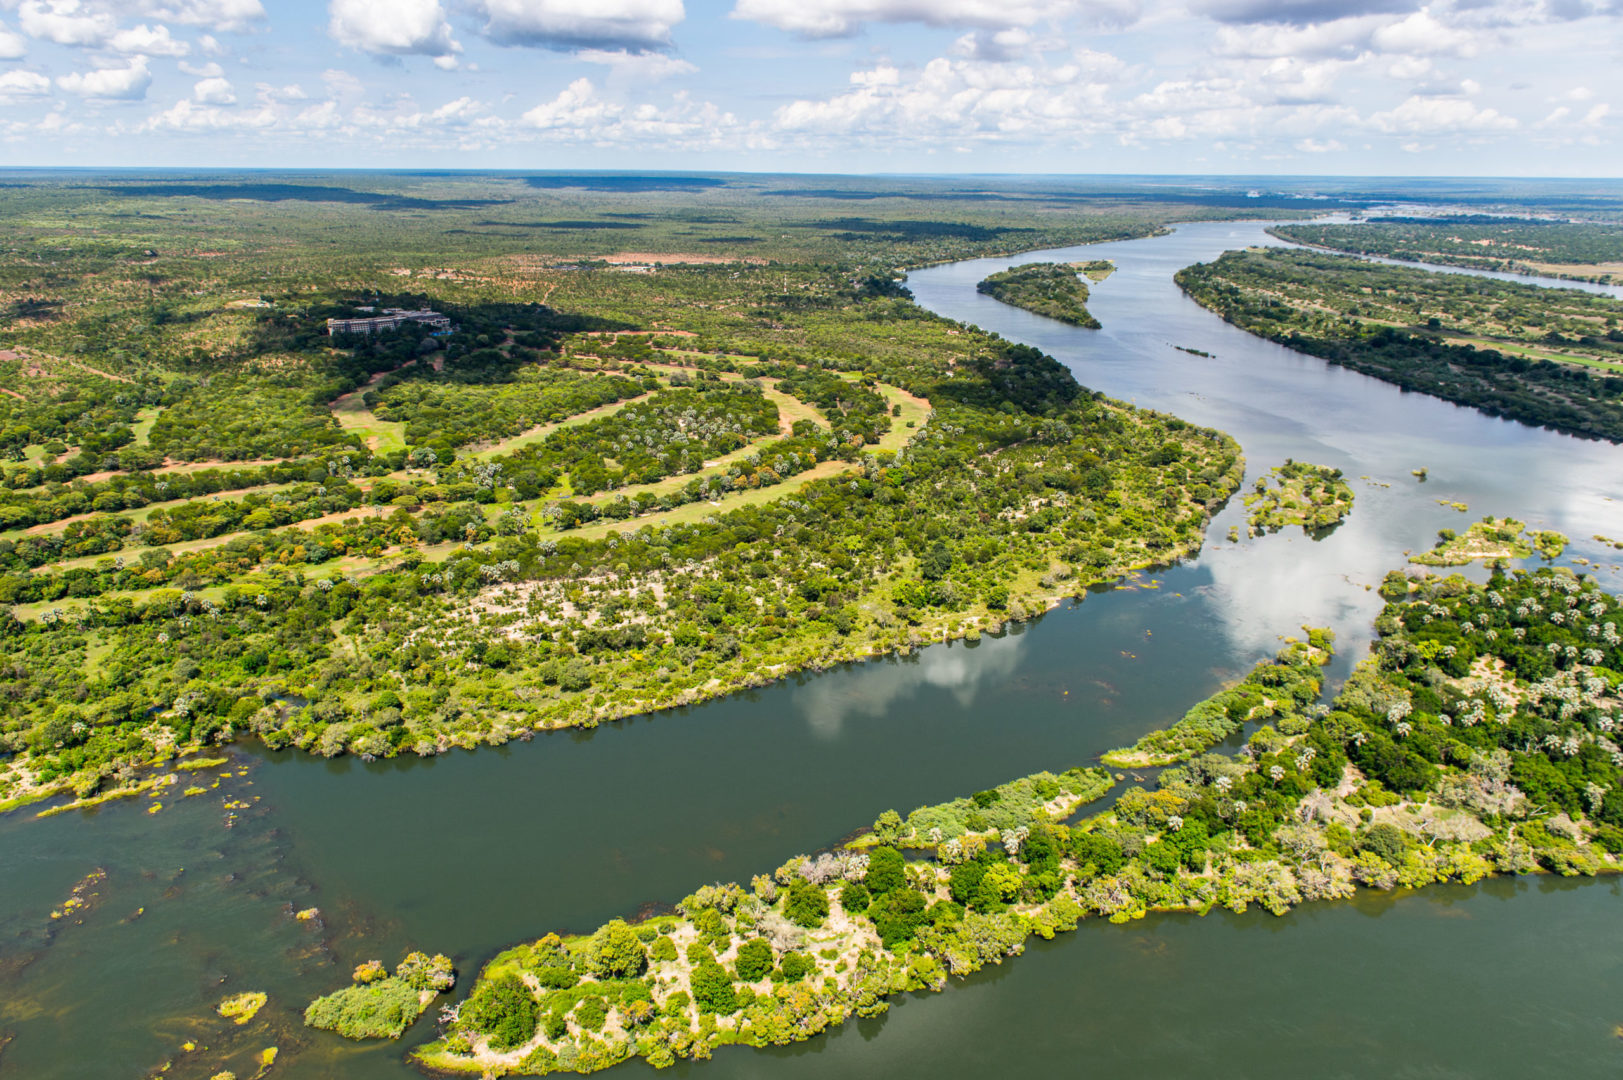 Sambesi-Fluss in Afrika, Reise ins südliche Afrika